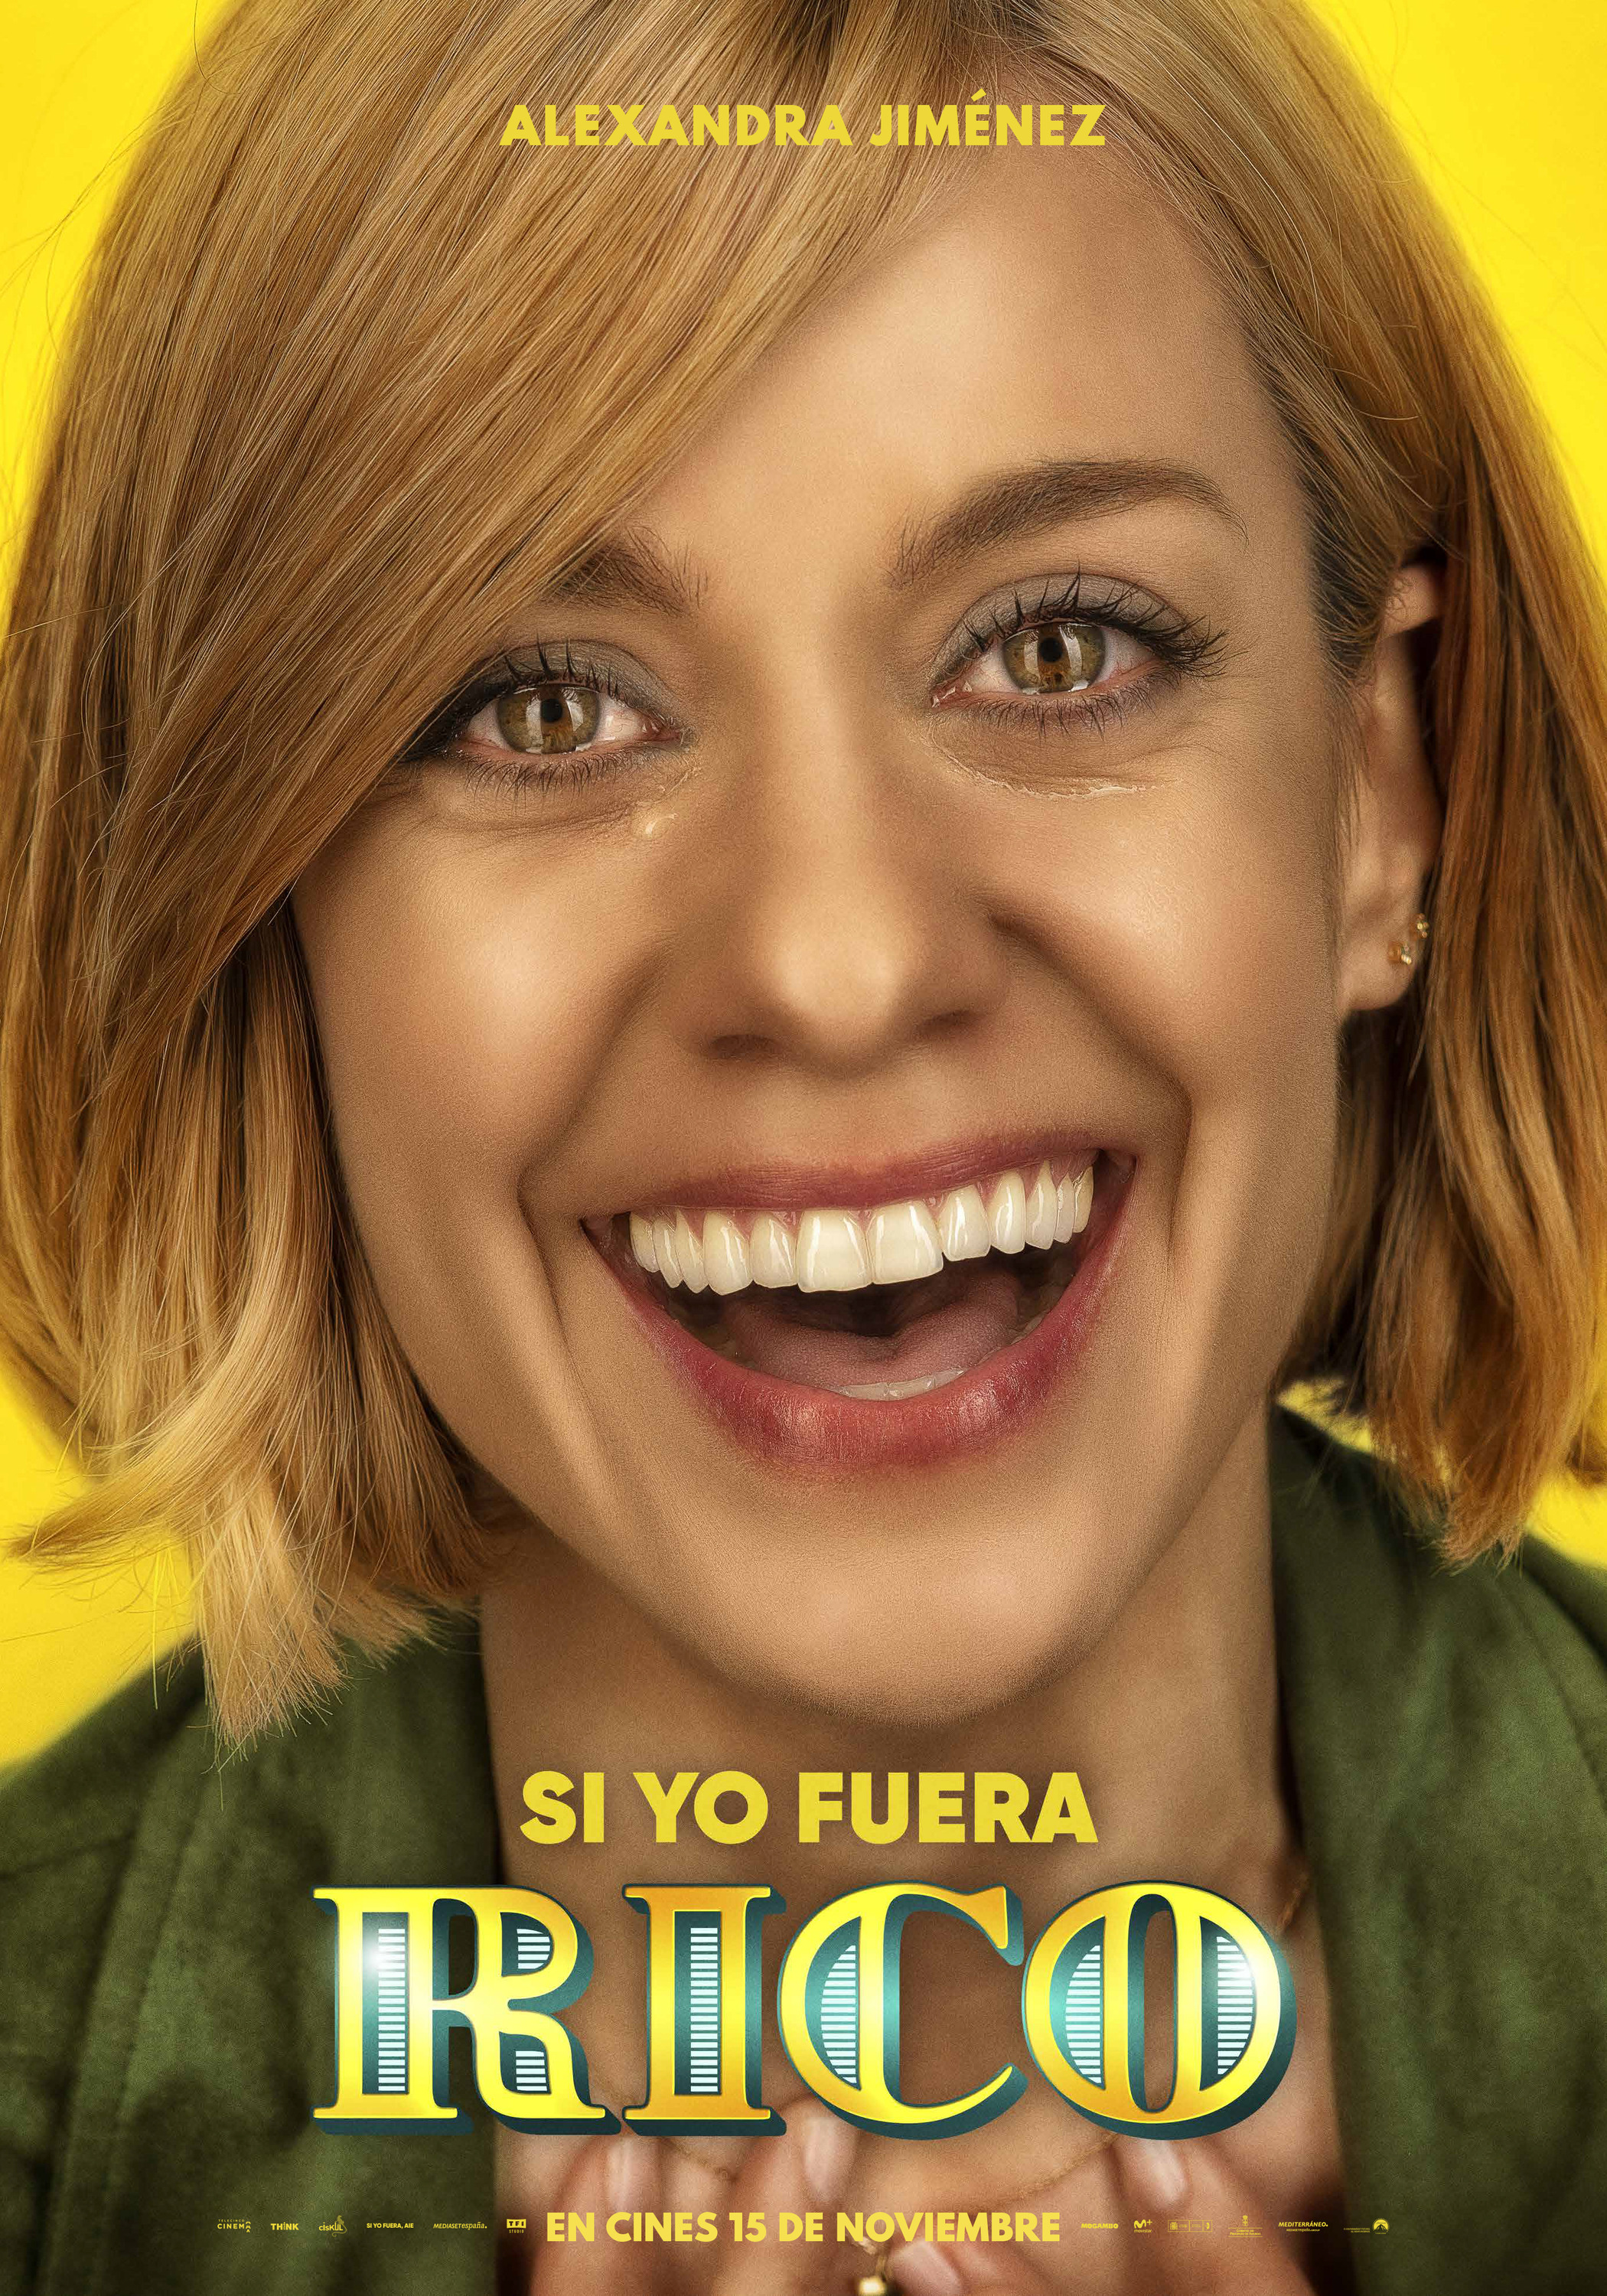 Mega Sized Movie Poster Image for Si yo fuera rico (#4 of 9)